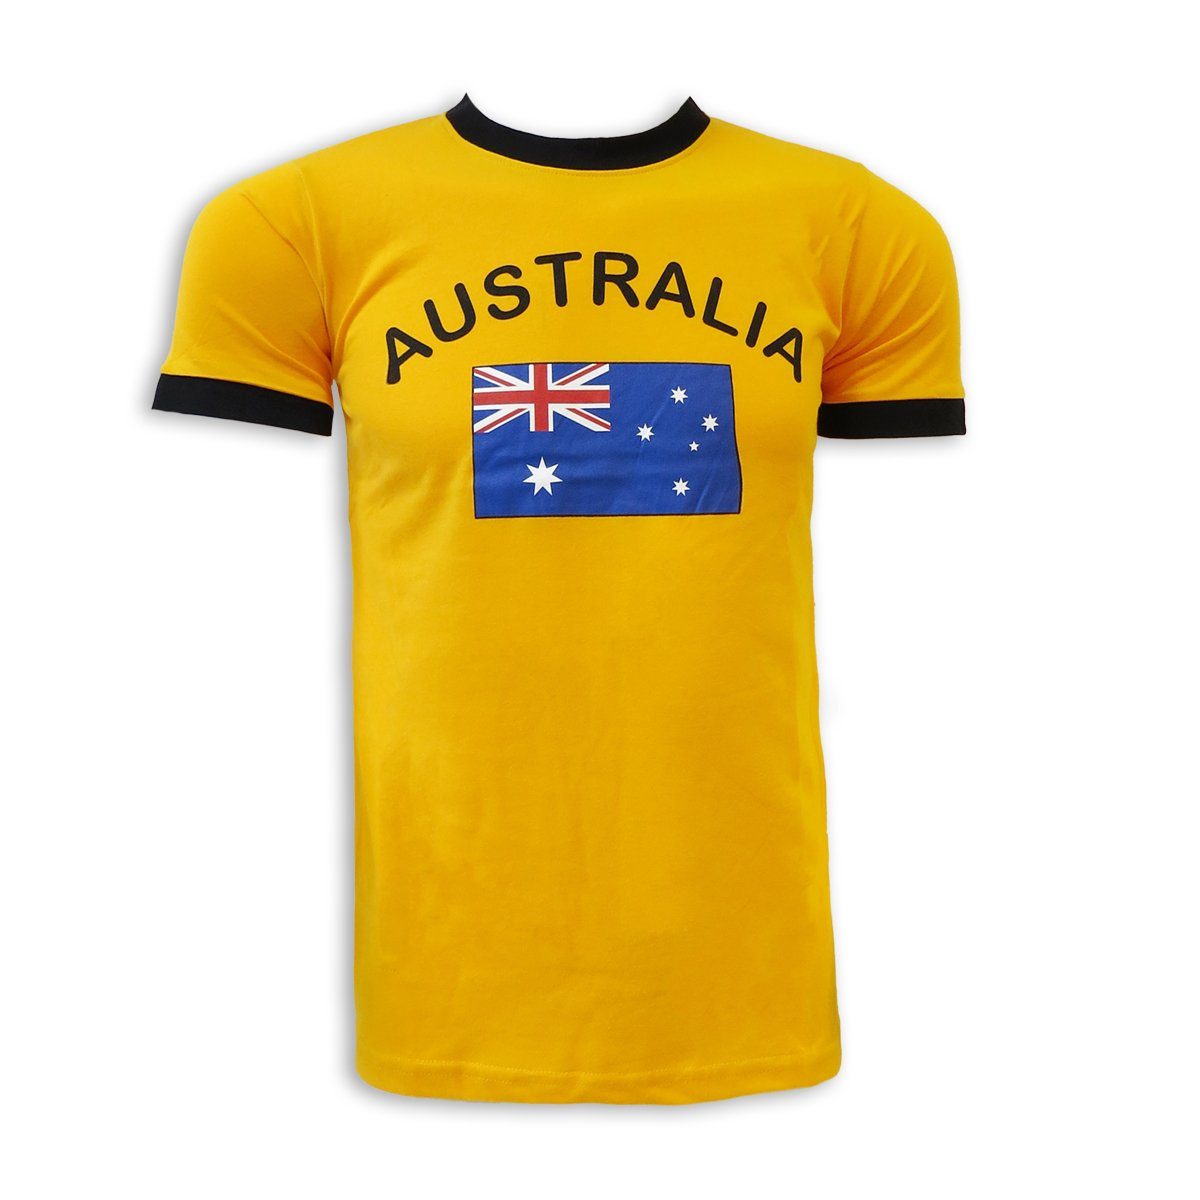 Sonia Originelli T-Shirt "Australia" Herren EM Fußball WM Unisex Fan-Shirt T-Shirt